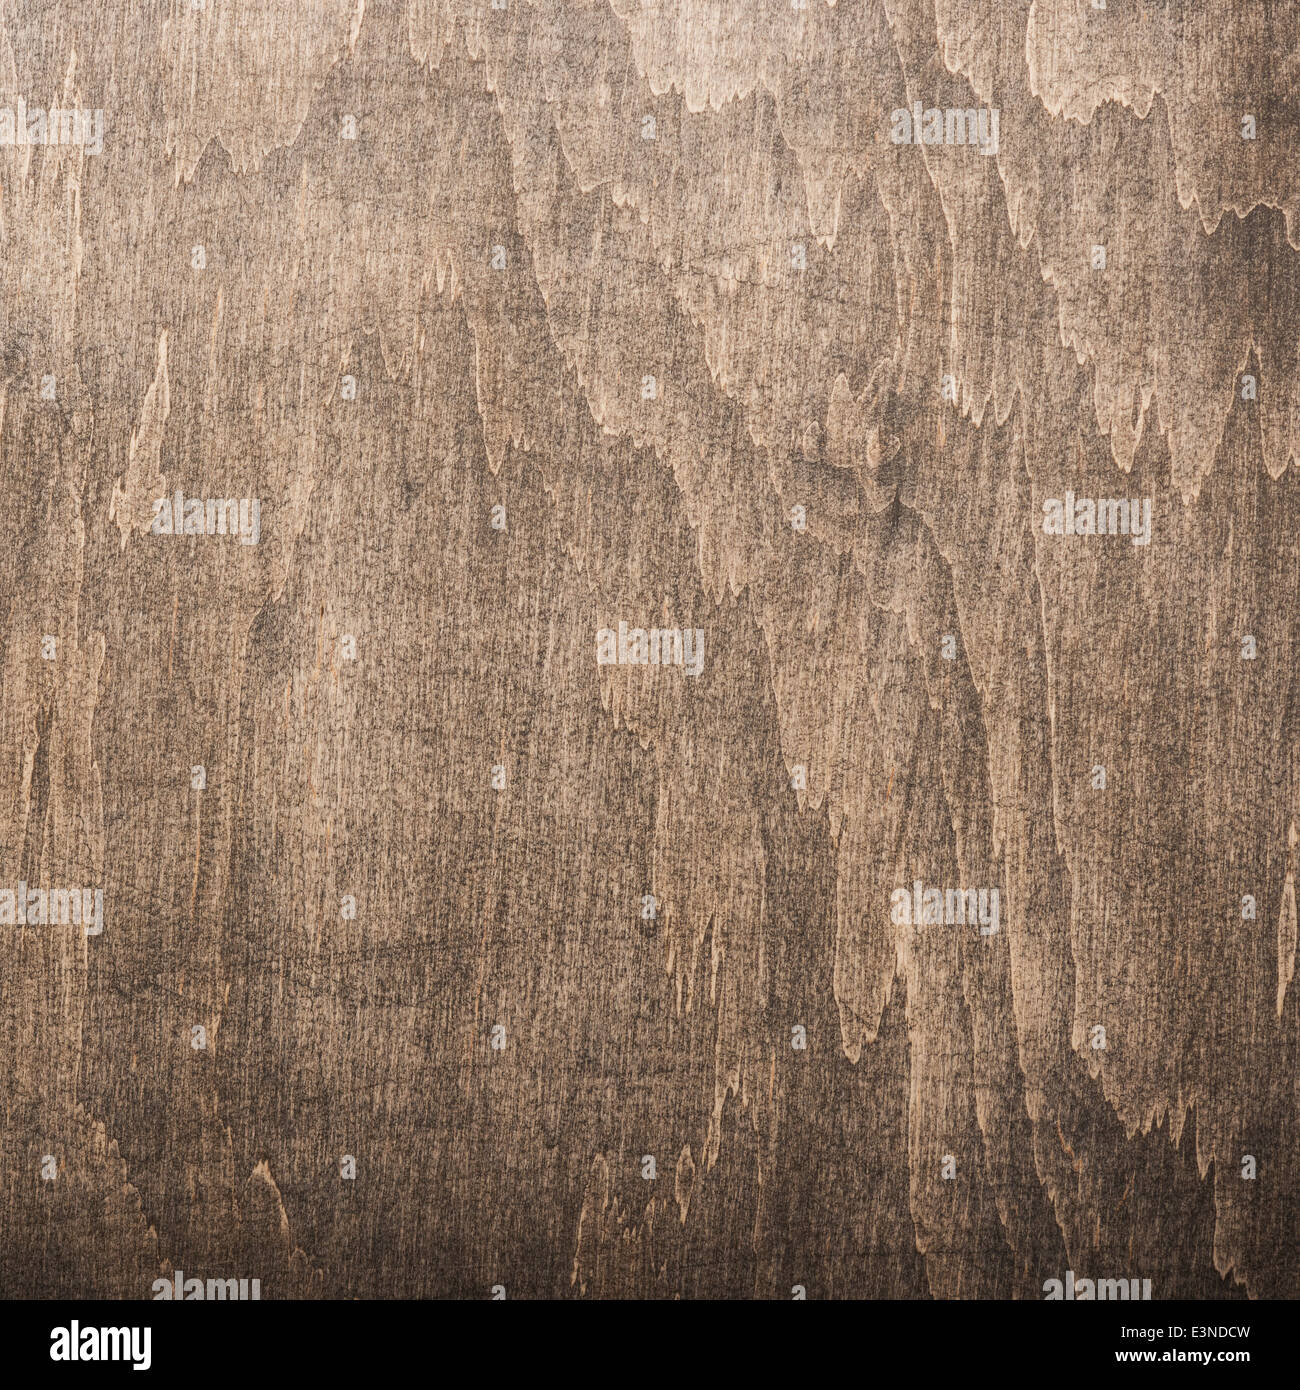 Wooden texture, grunge wood background Stock Photo